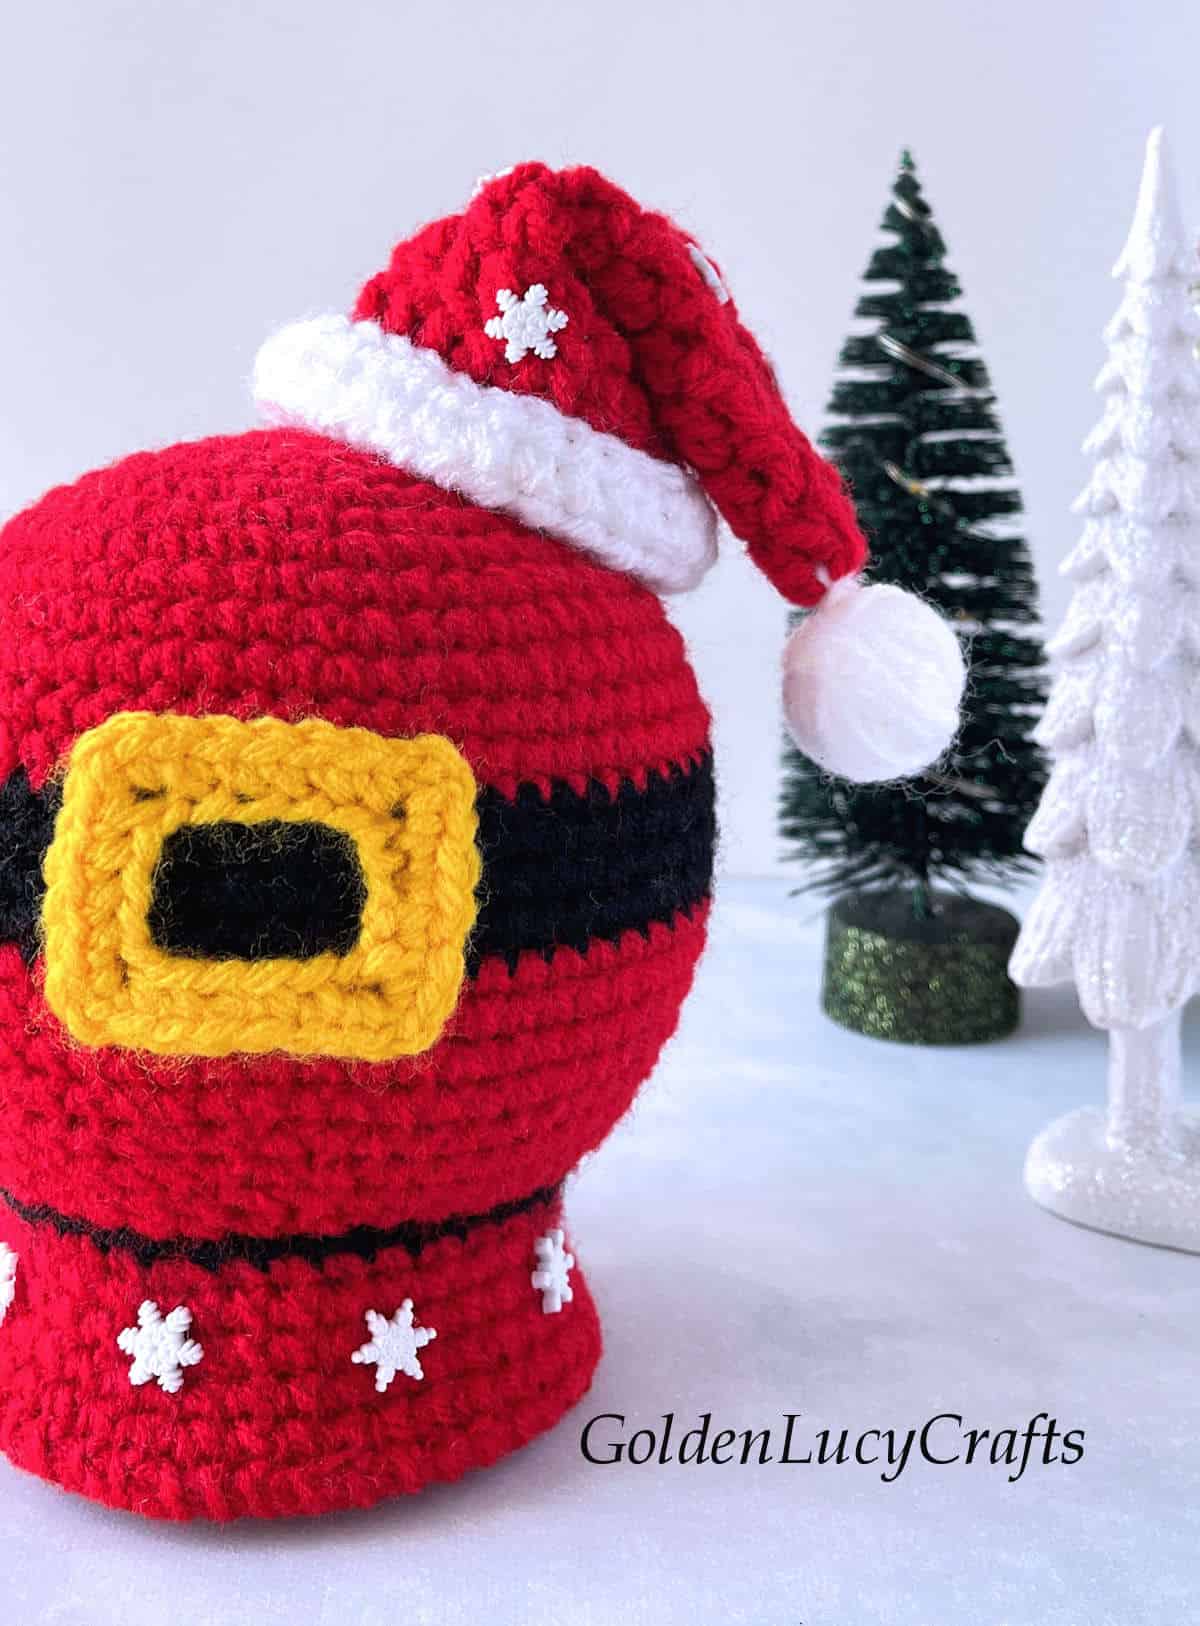 Crochet Santa belly snow globe close up picture.